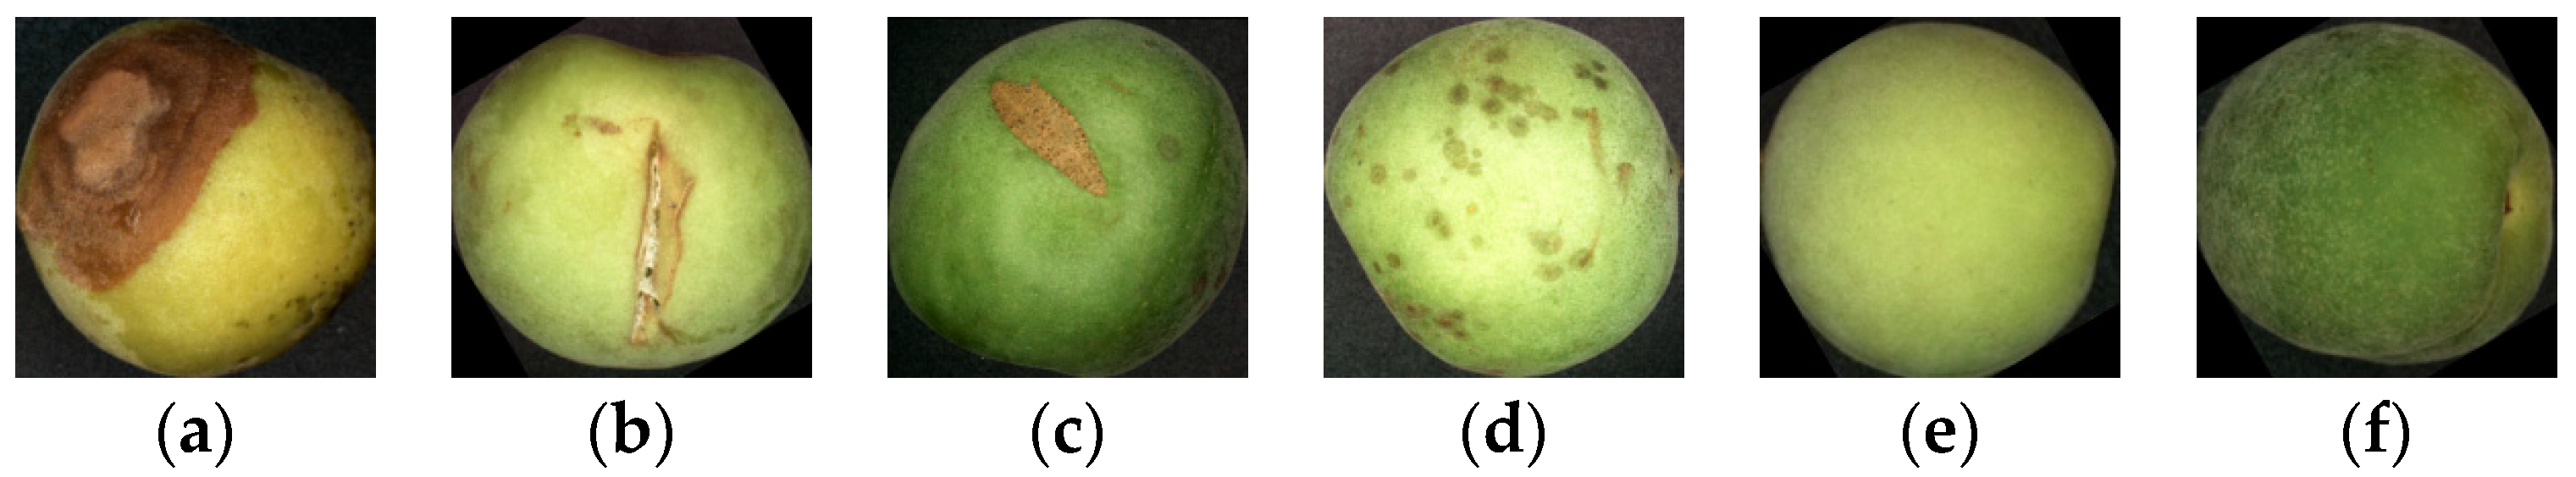 Sample RGB database images a rotten apple, b rotten avocado, c rotten